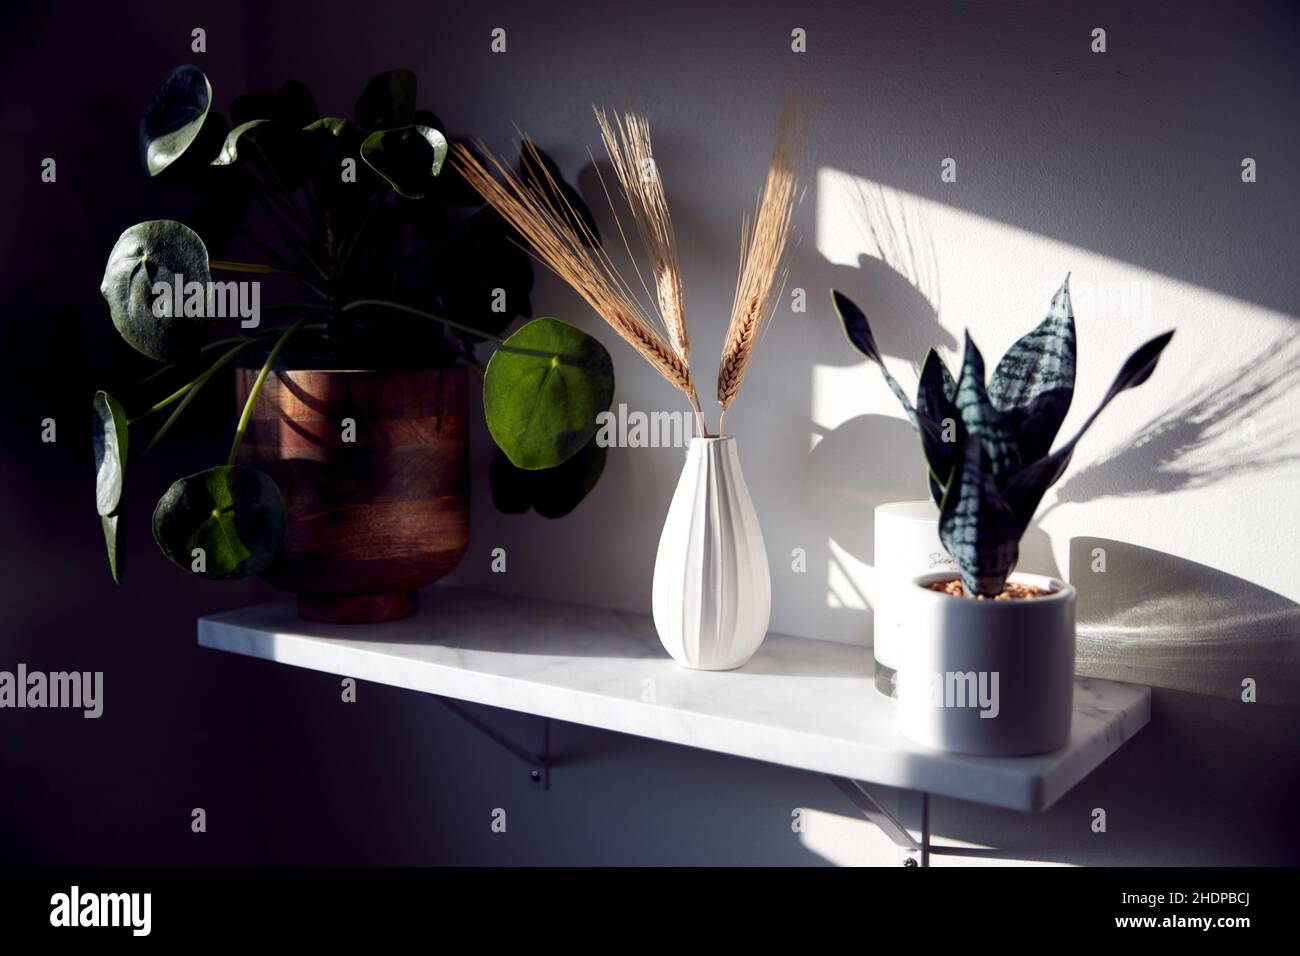 vaso, arredamento, mods chiari, vasi, decori, luce Foto Stock